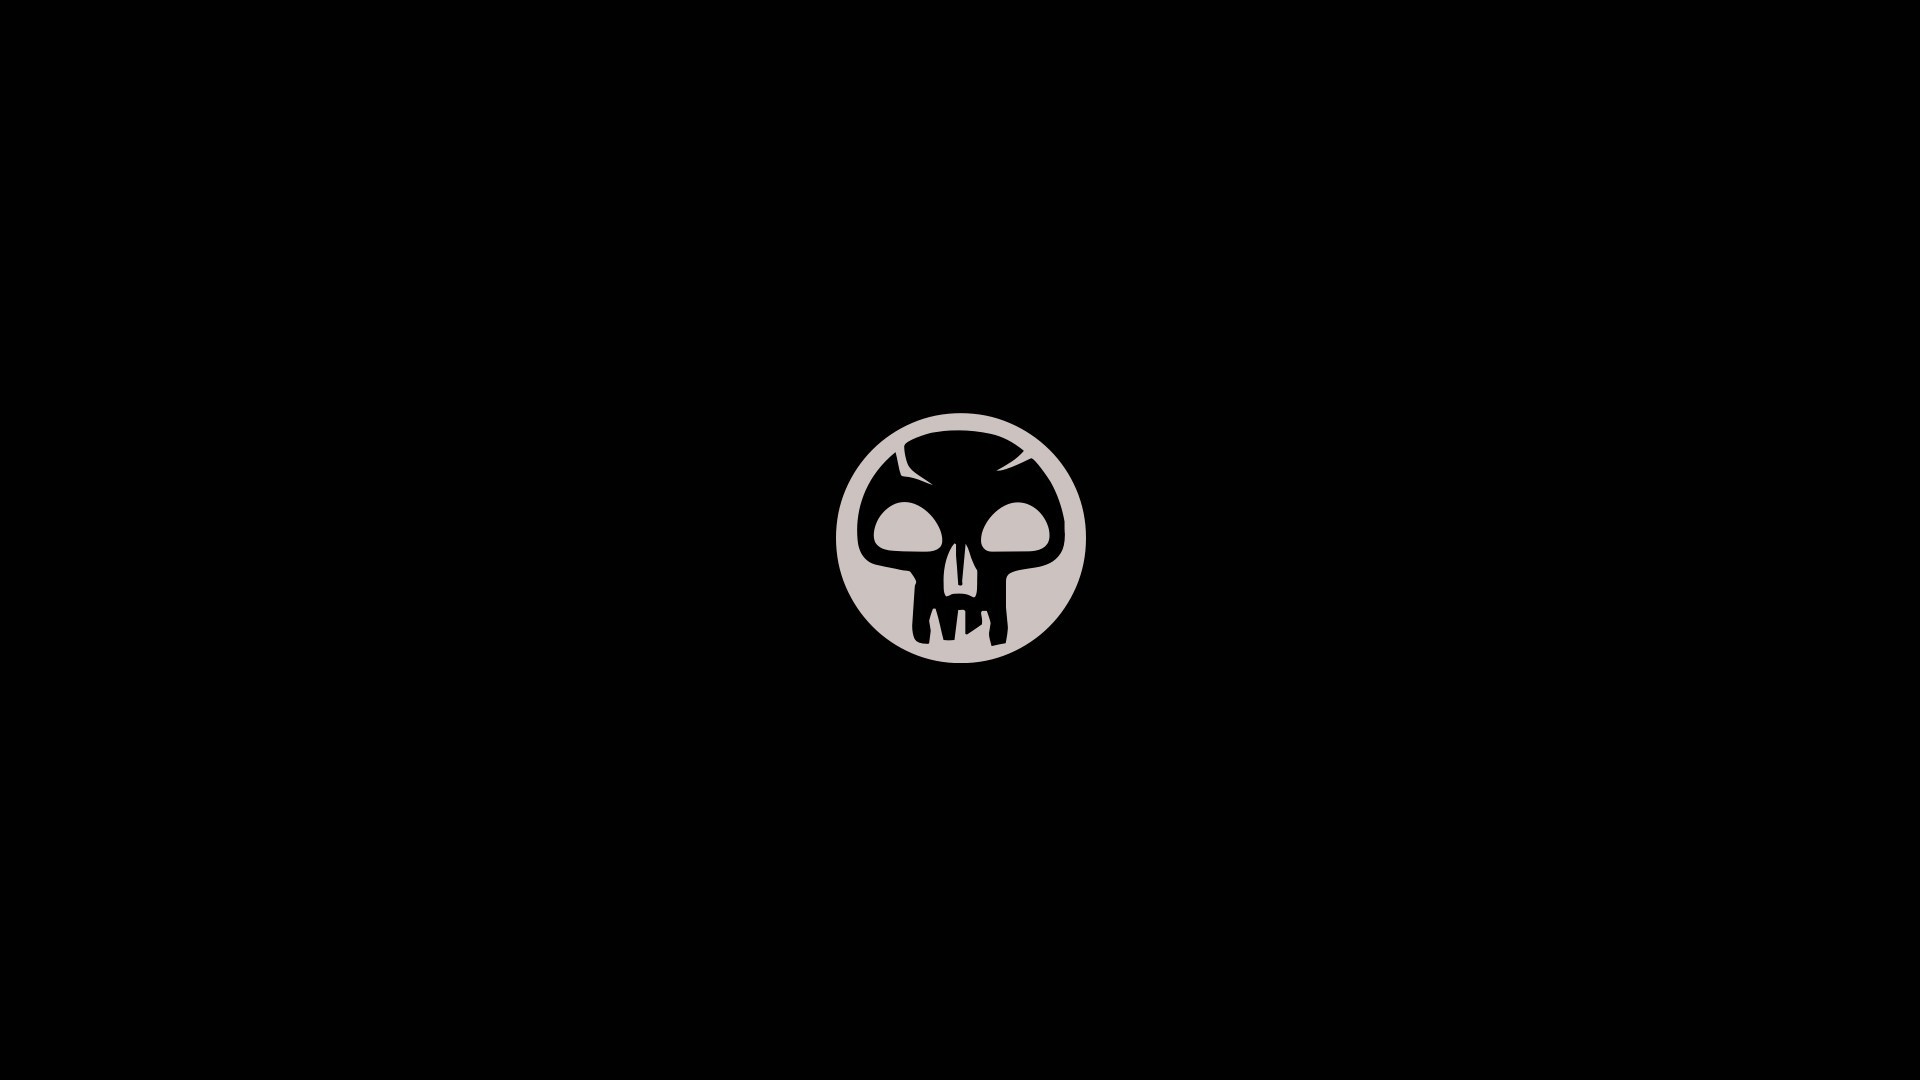 1920x1080 black background minimalism text logo simple Magic The Gathering circle  skull brand Trading Card Games symbol